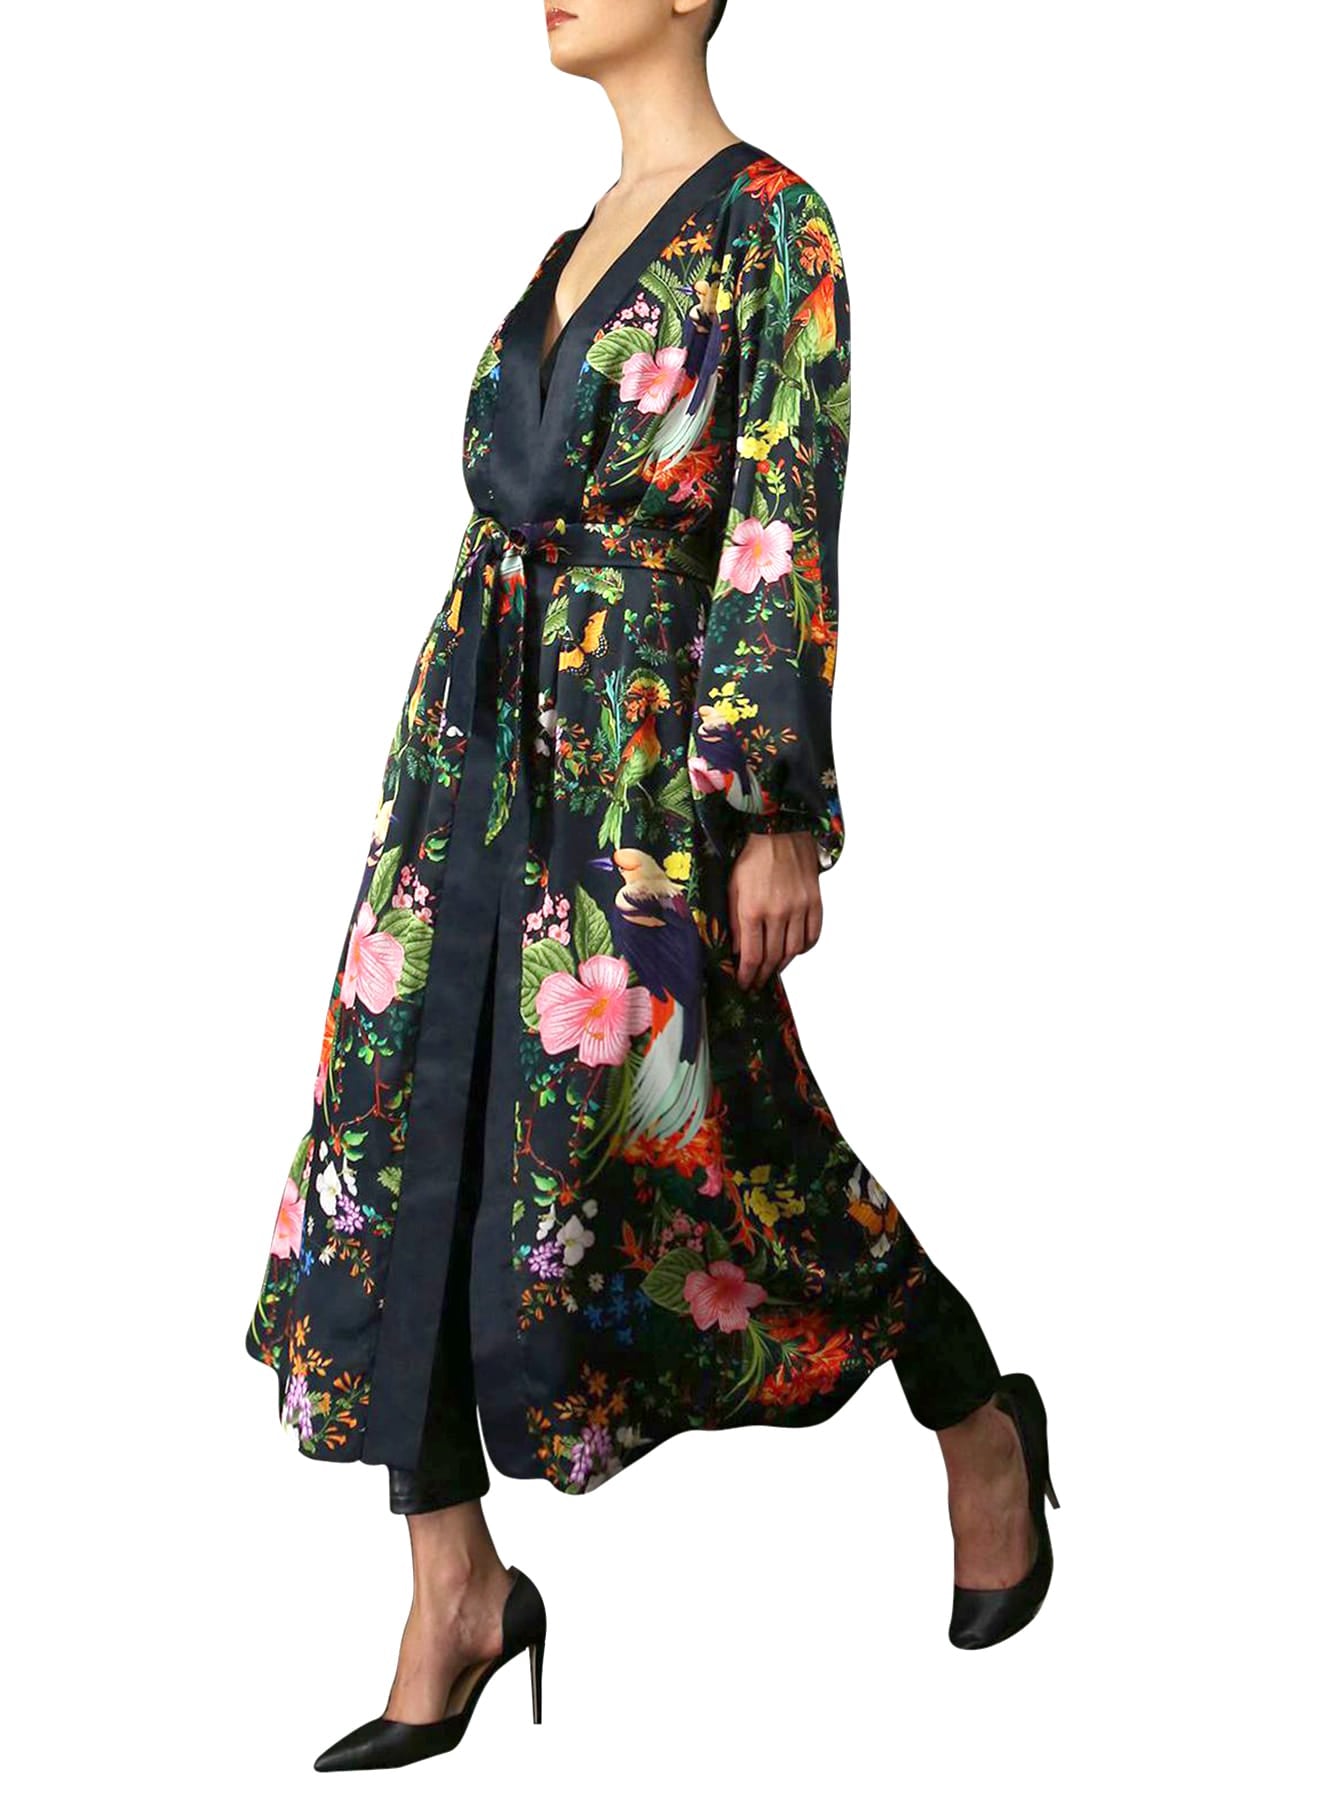 "Kyle X Shahida" "black silk robe womens" "long silk robe" "silk robes for women" "robe dress silk"